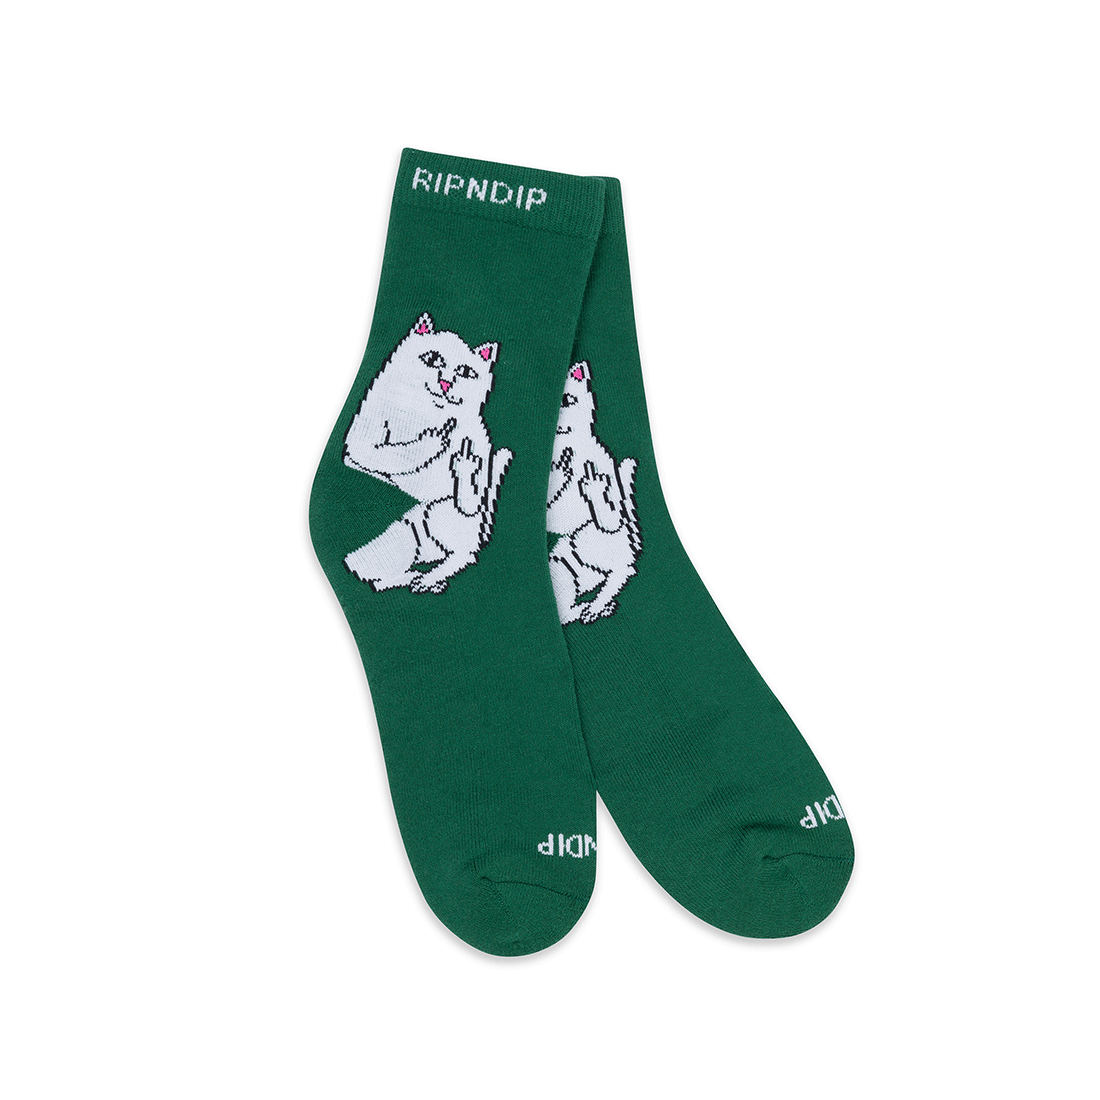 Rip n Dip Socks - Imma Head Out - Green